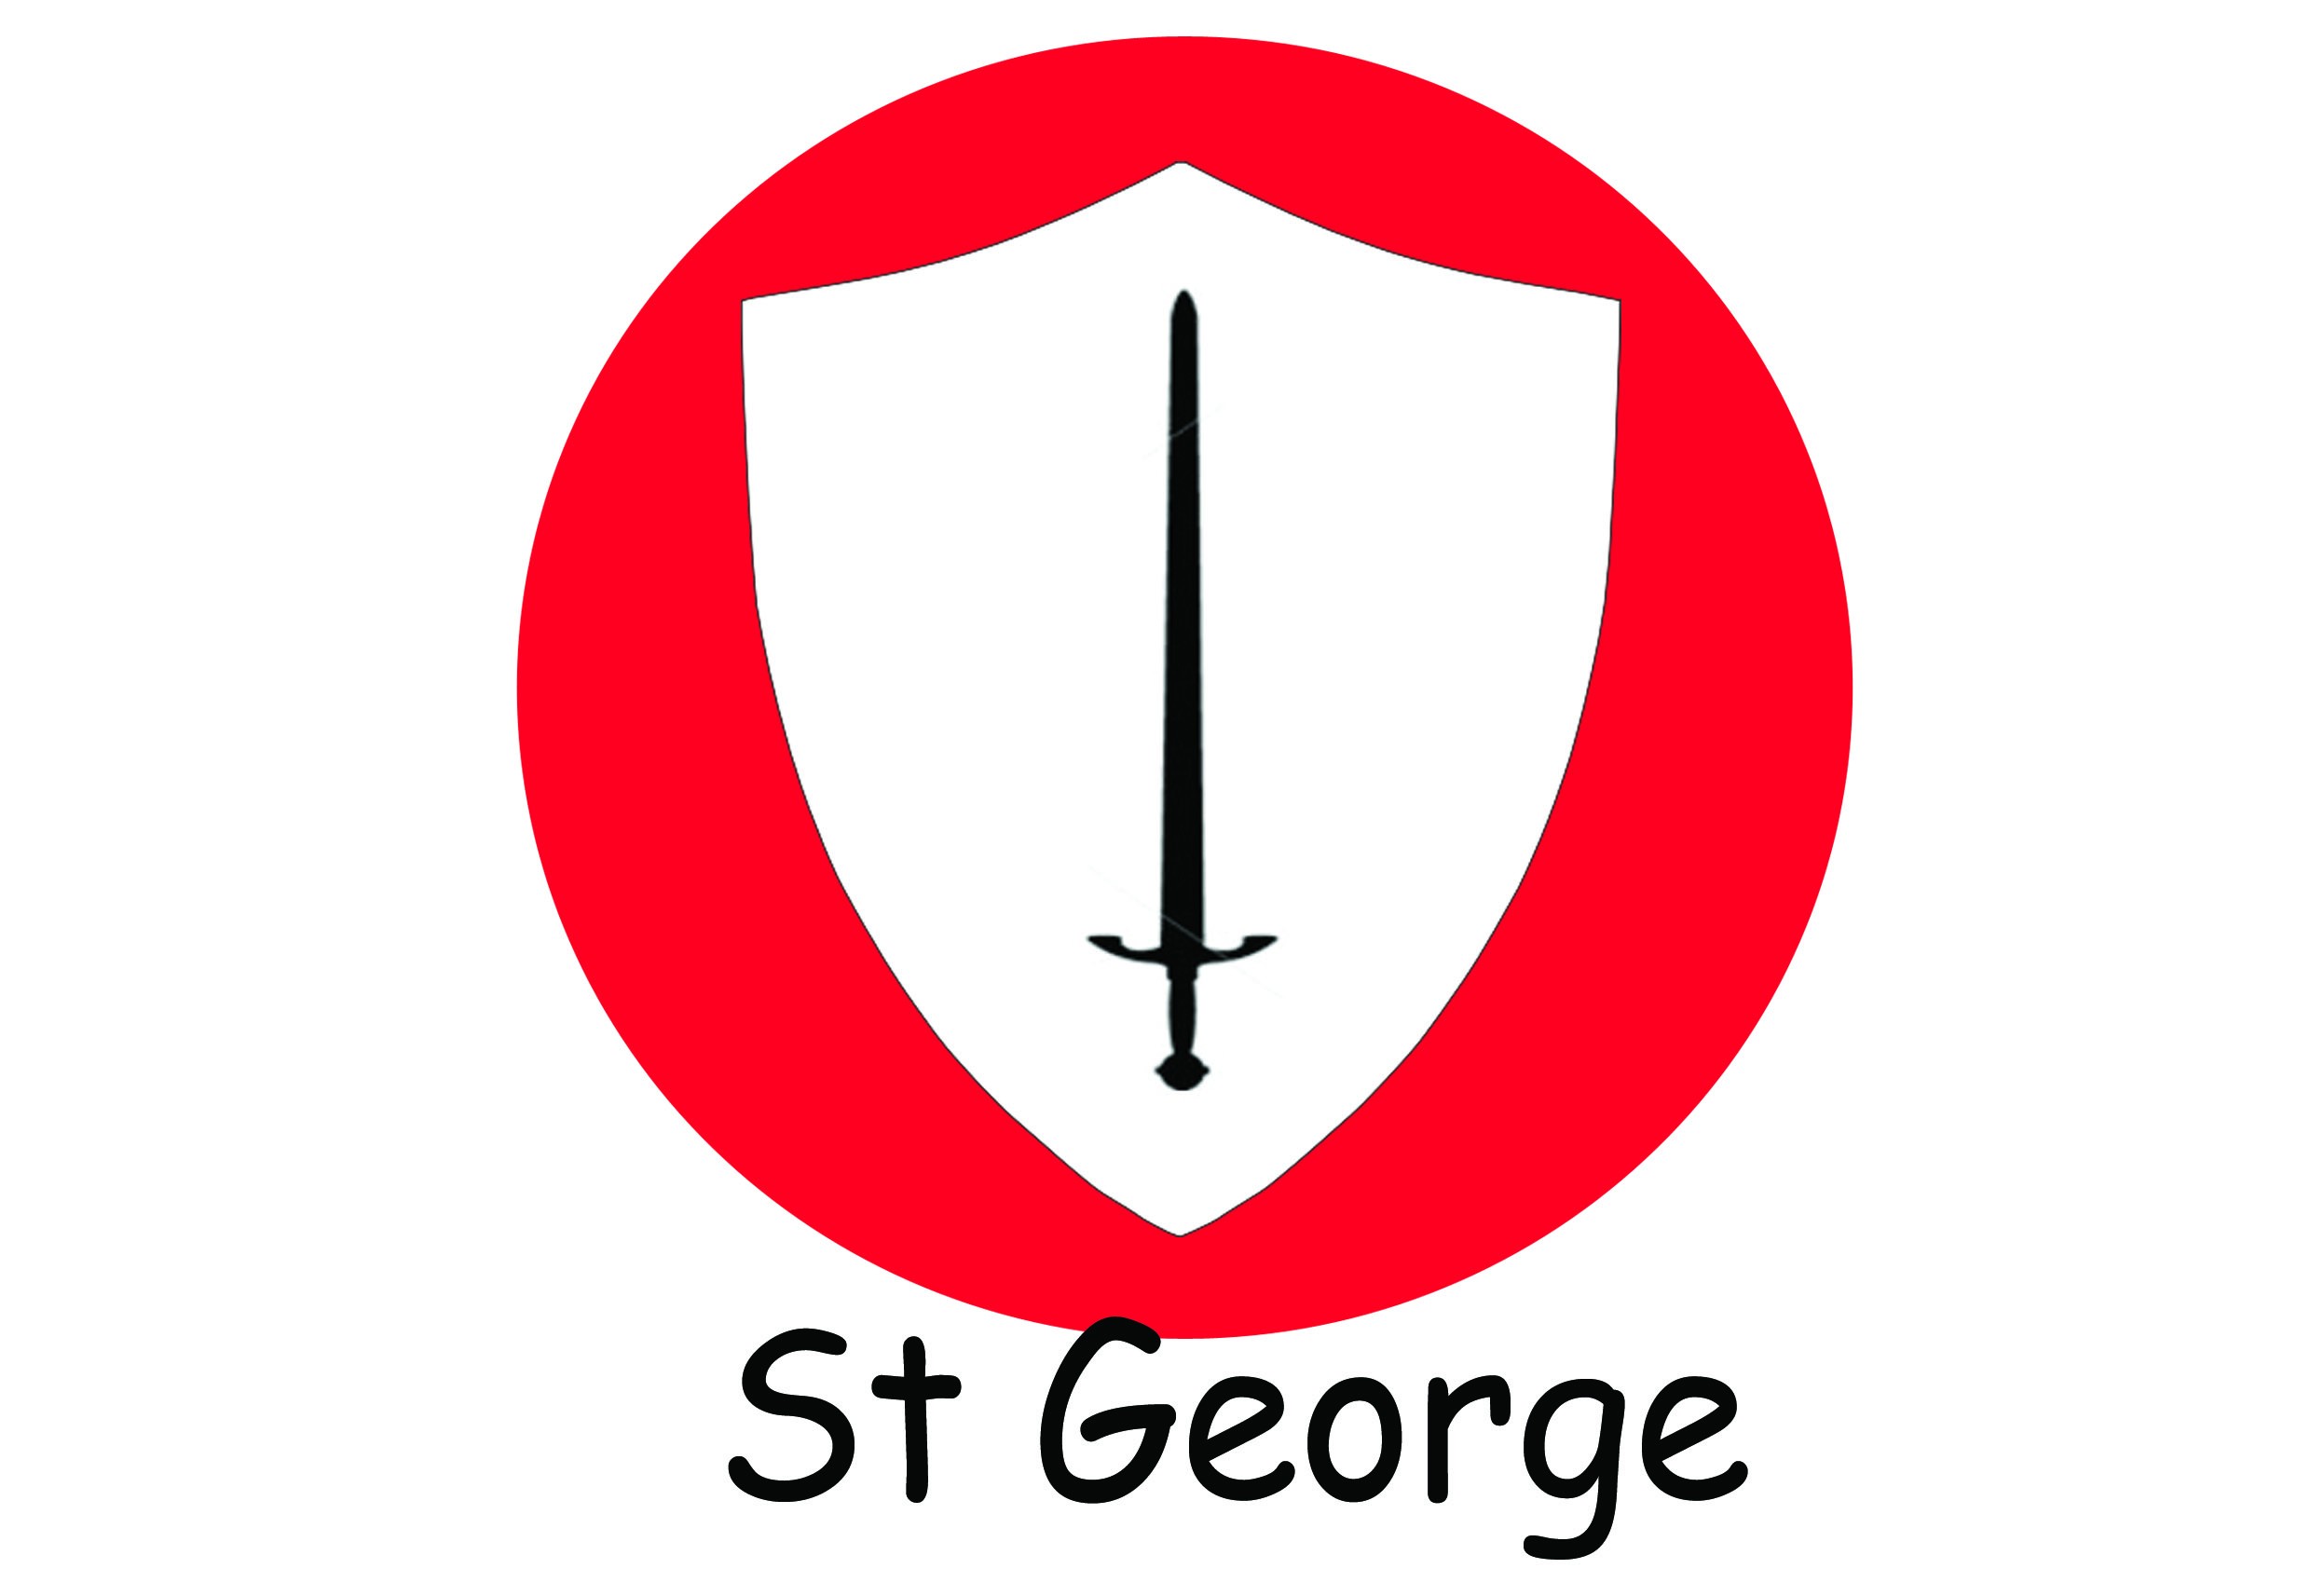 st george shield | hadrianacademy